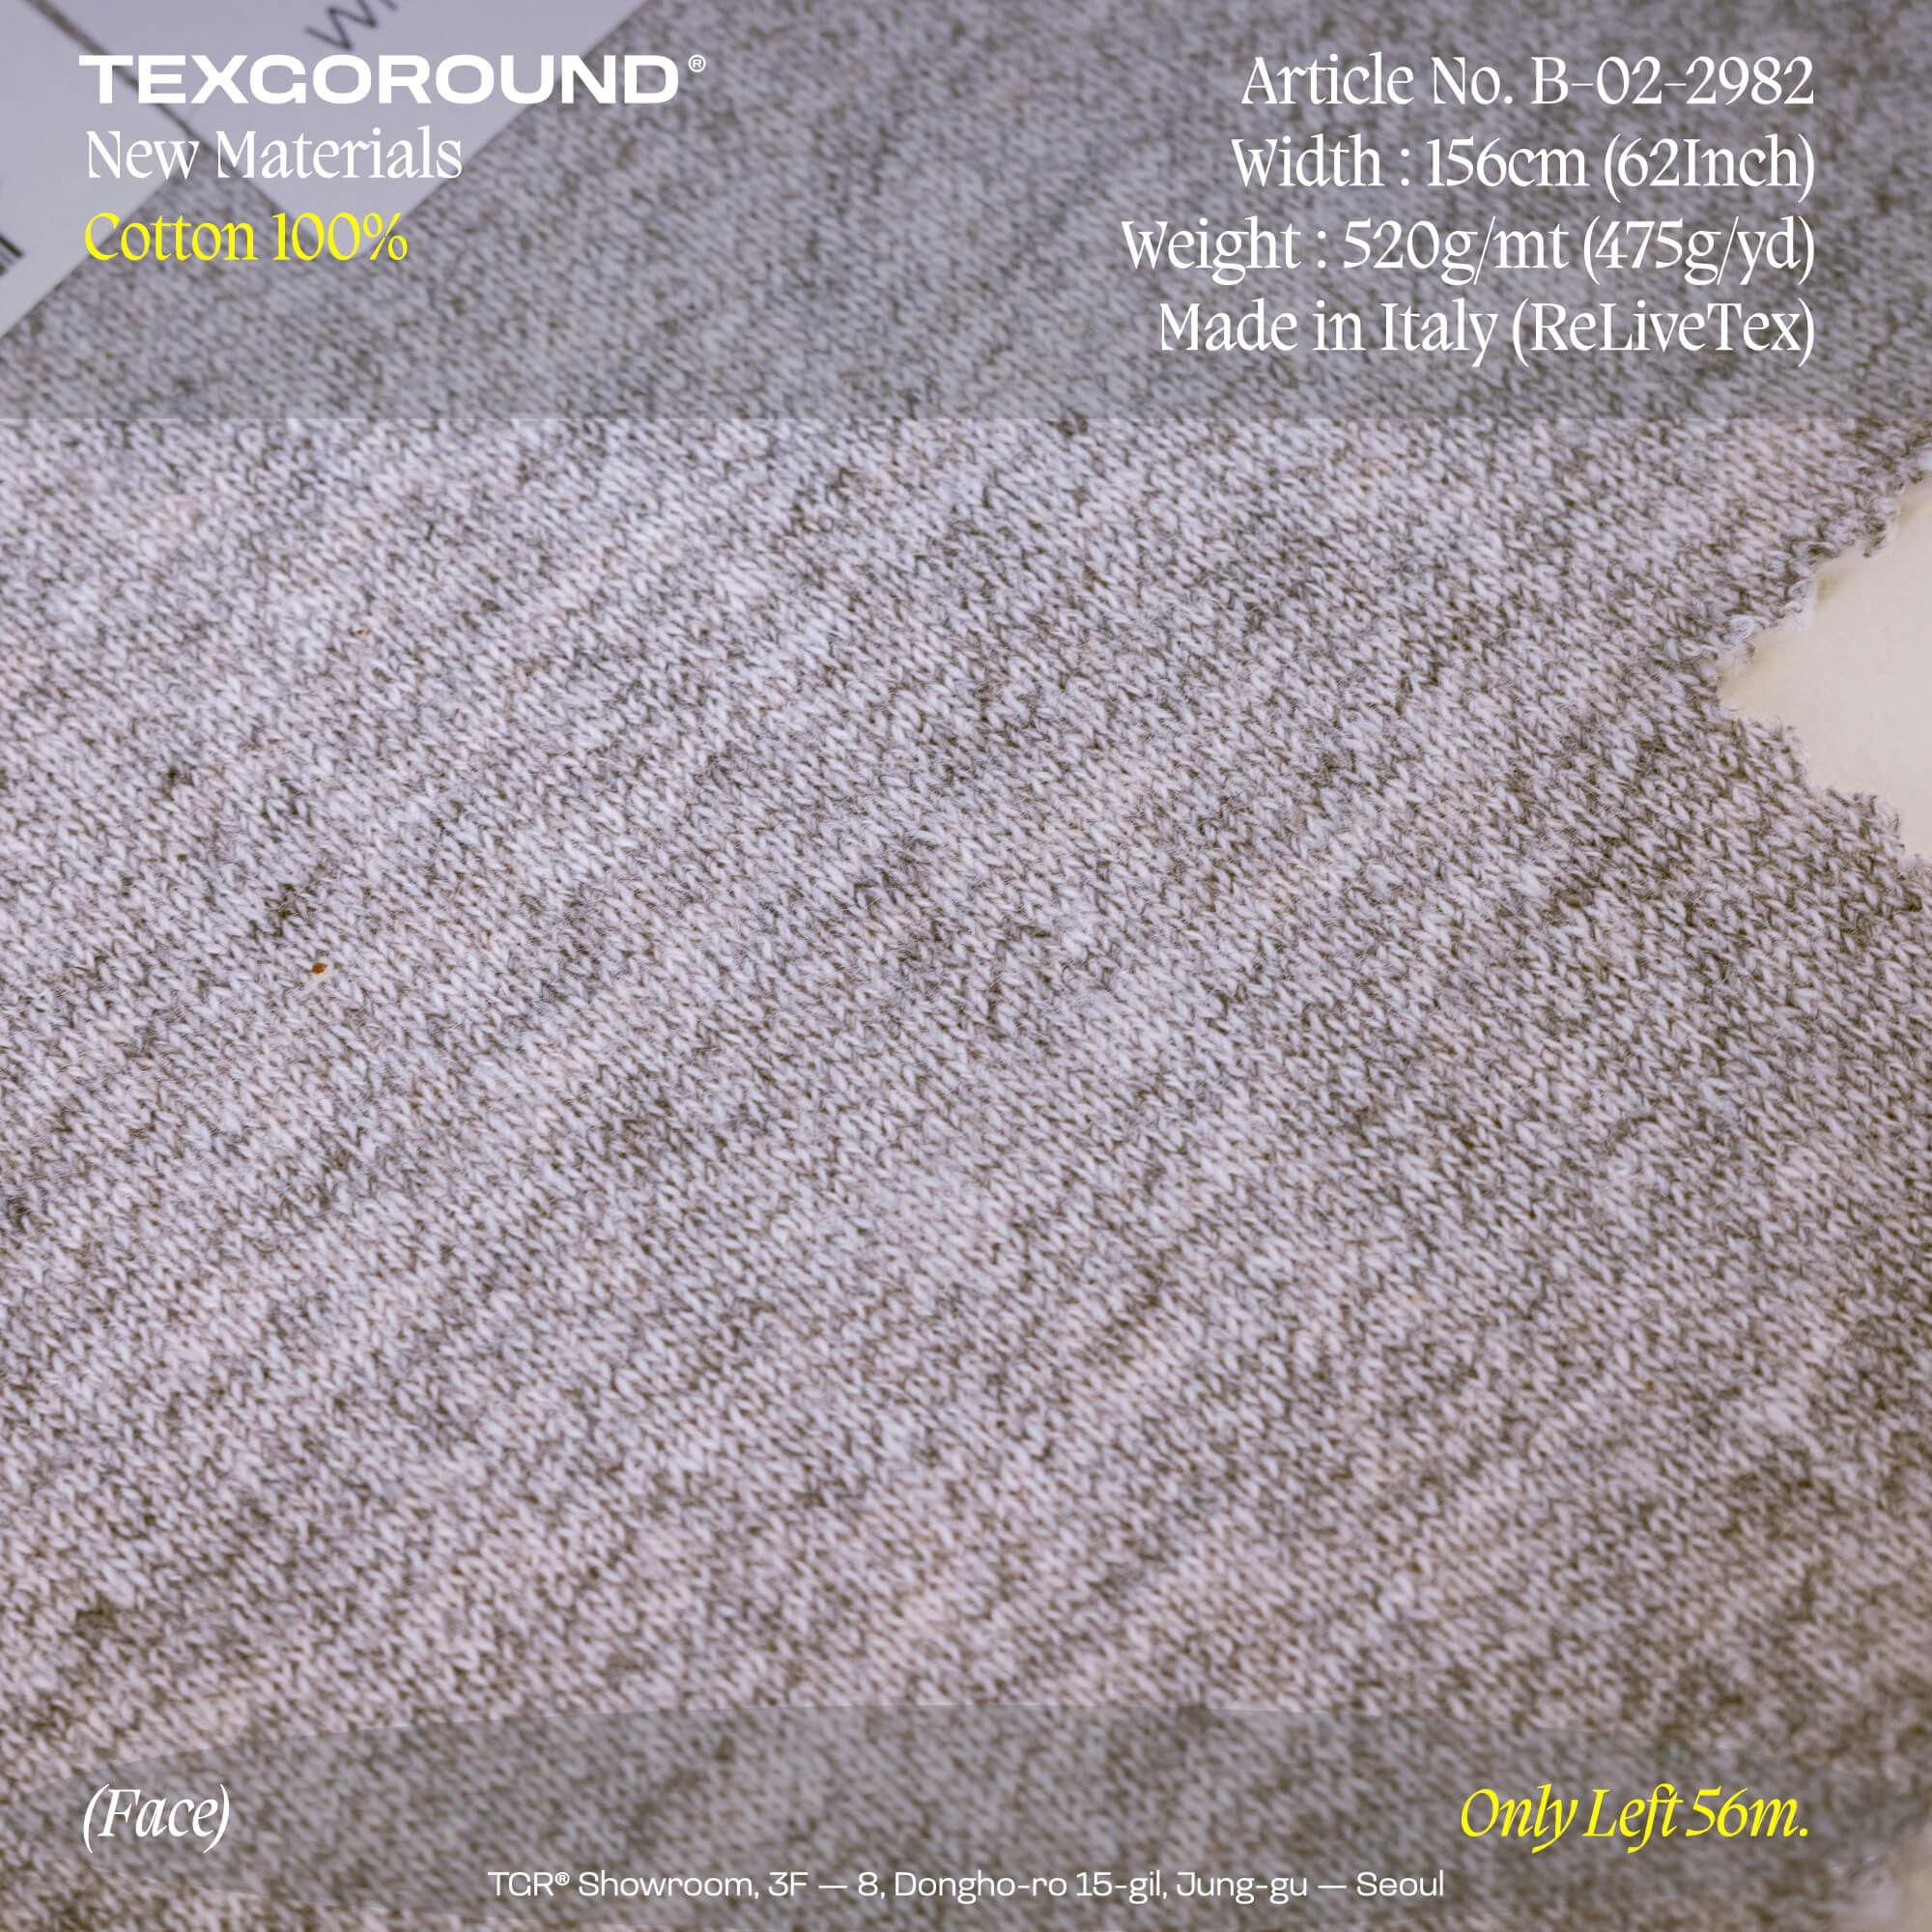 TEXGOROUND® New Materials (2) - Cotton 100%